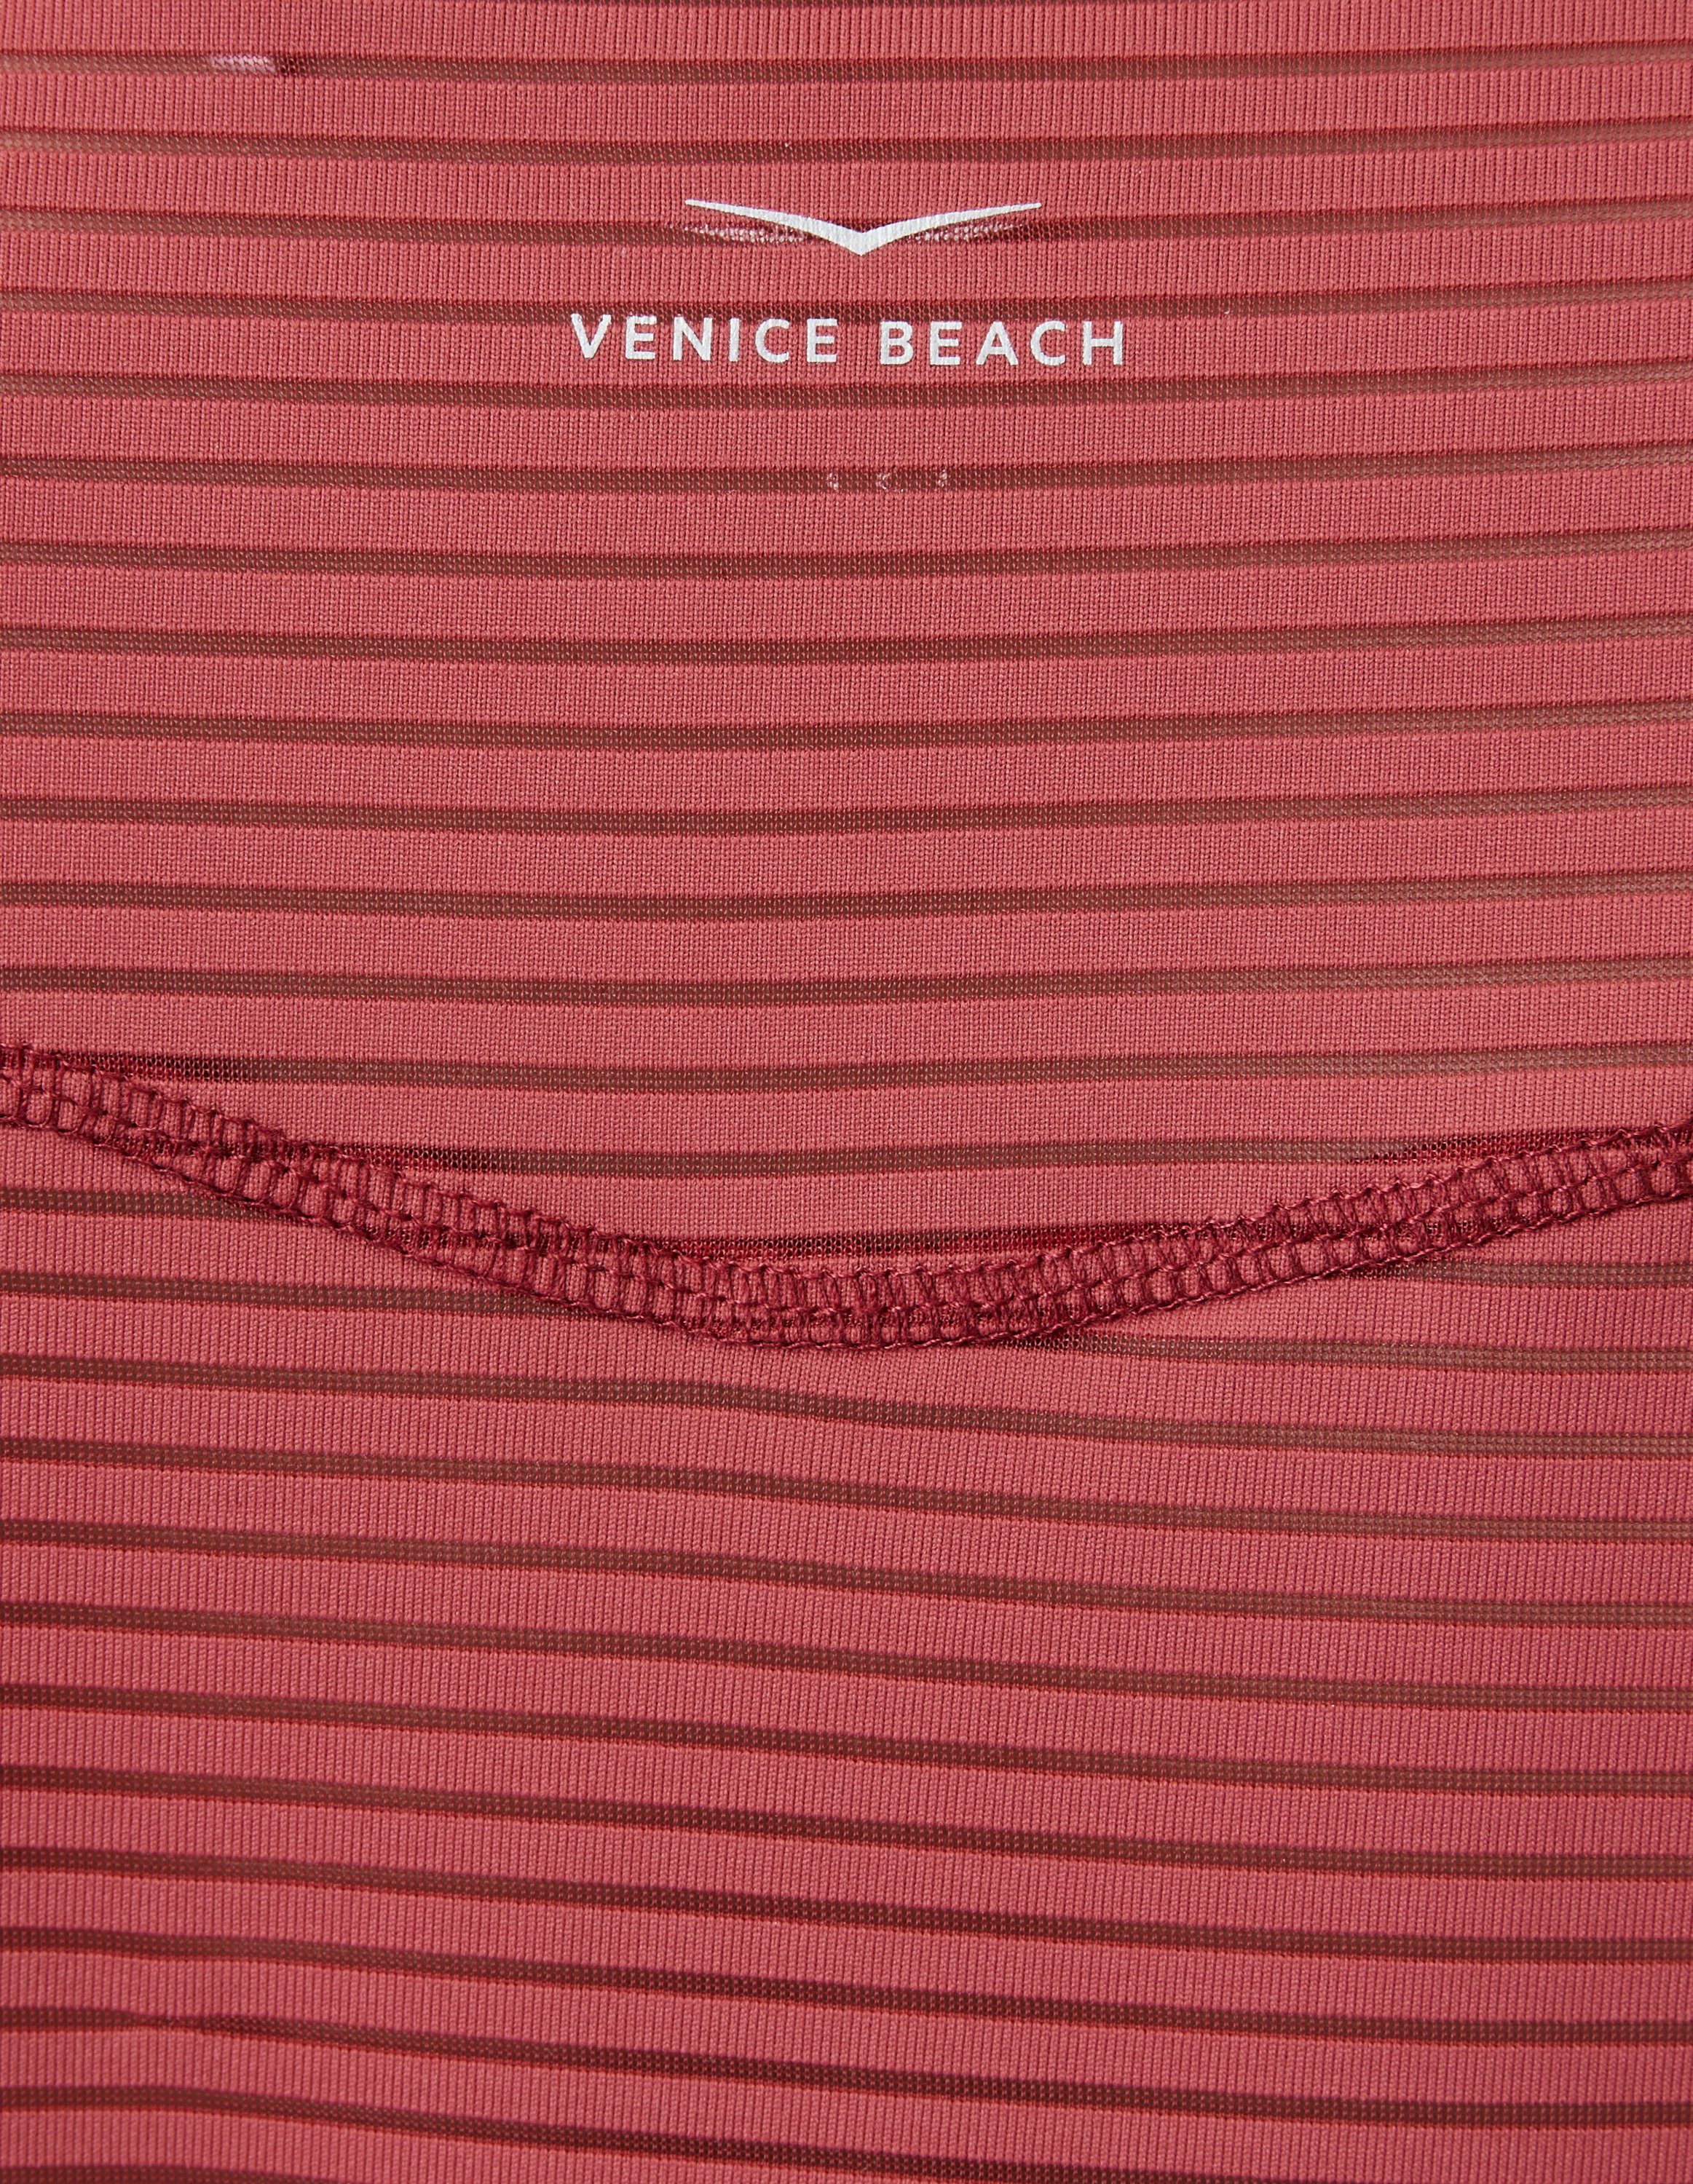 T-Shirt Damaris Beach T-Shirt VB Venice